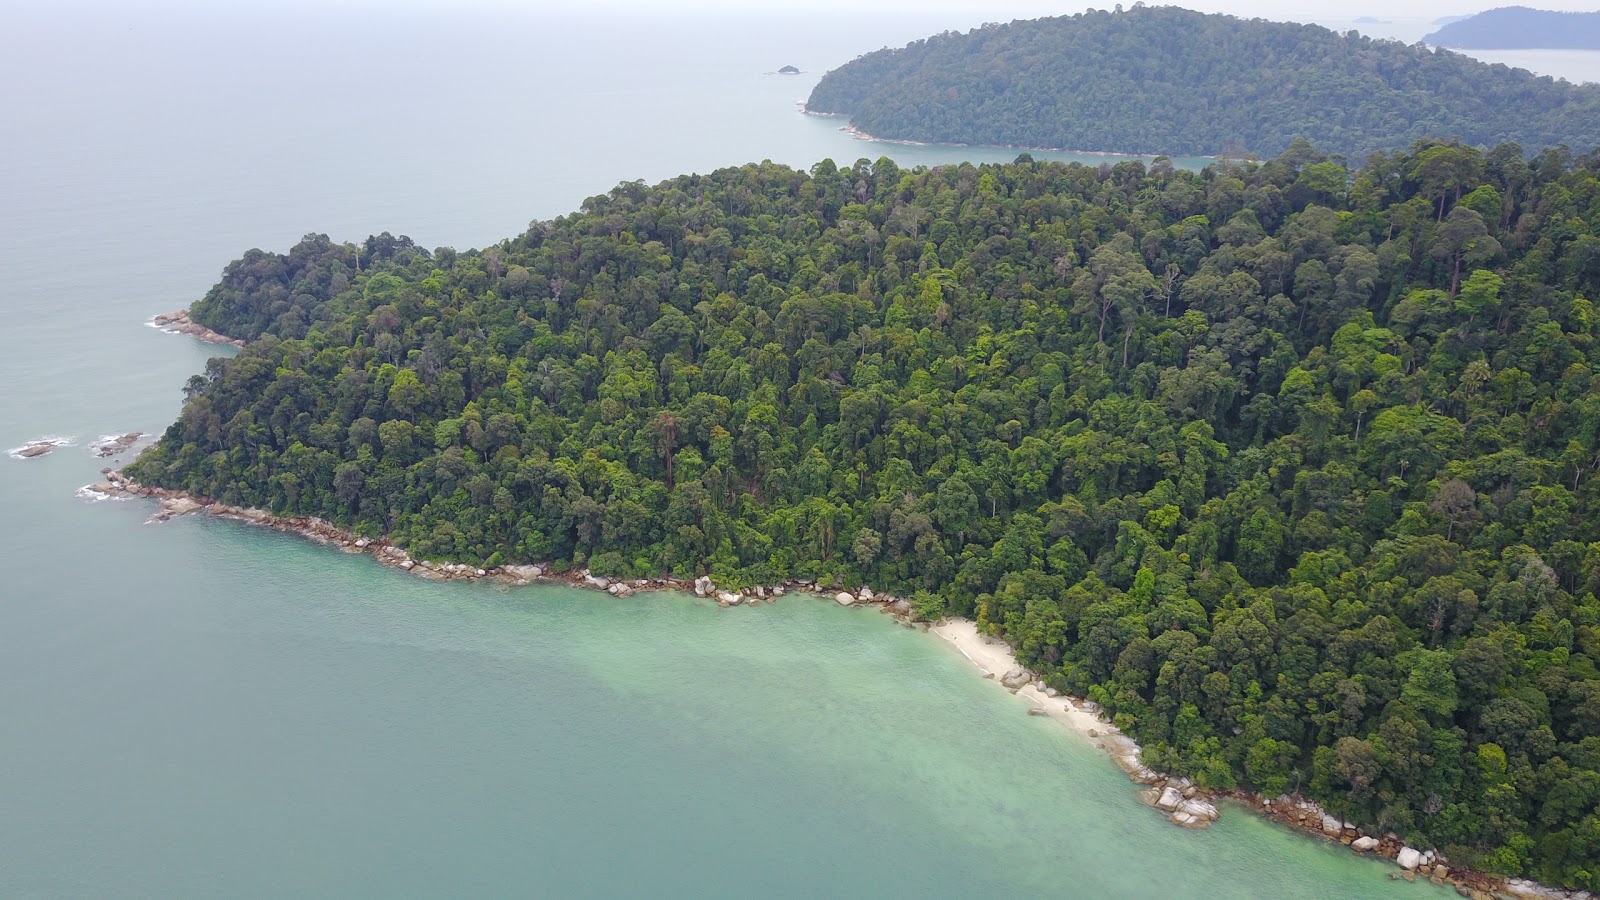 Foto di Coral Beach ubicato in zona naturale